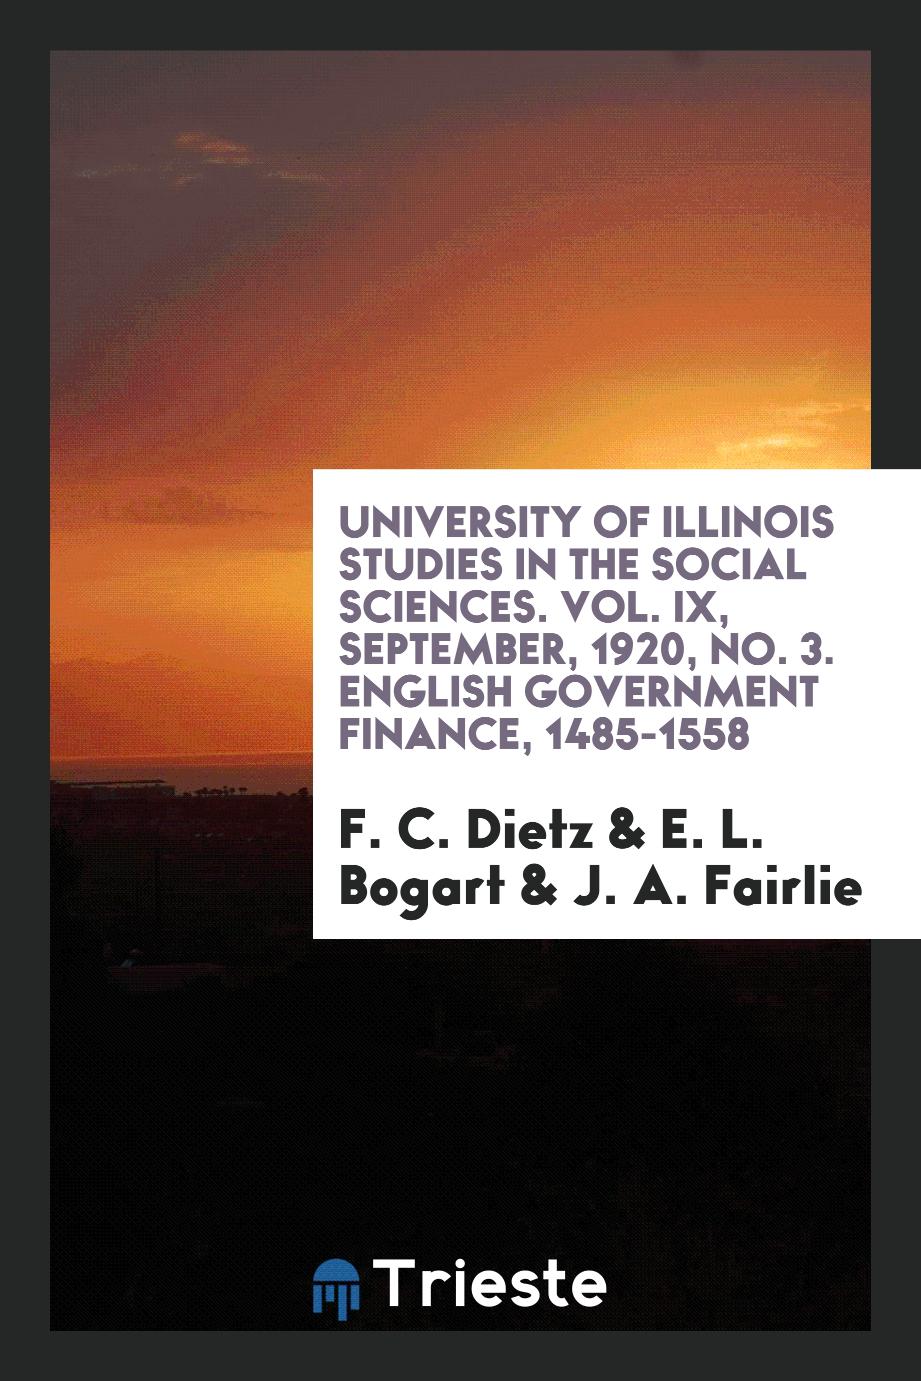 F. C. Dietz, E. L. Bogart, J. A. Fairlie - University of Illinois Studies in the Social Sciences. Vol. IX, September, 1920, No. 3. English Government Finance, 1485-1558